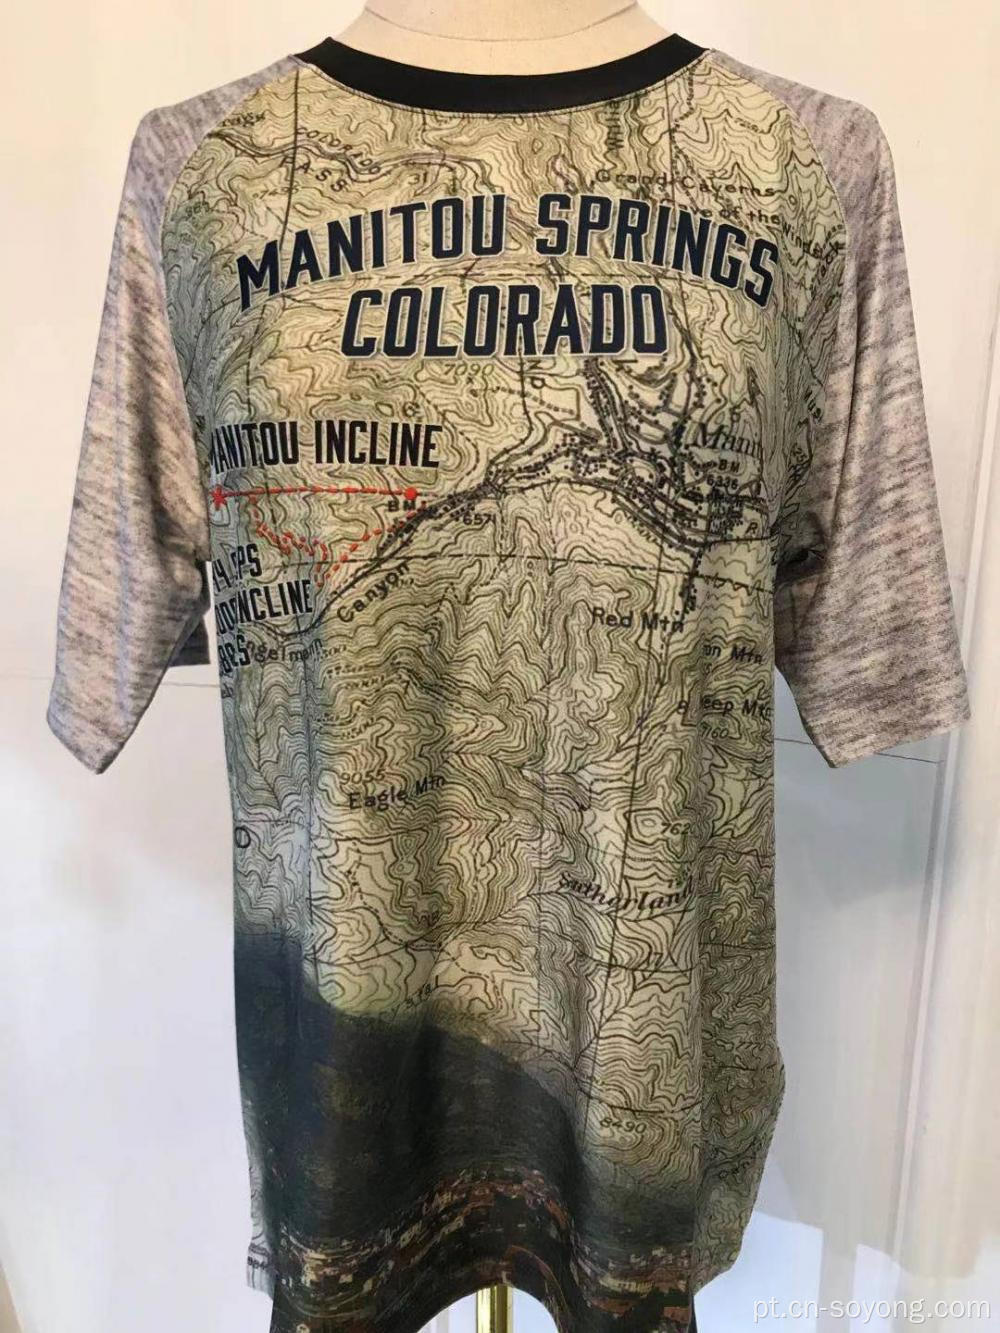 Camisetas masculinas Colorado Manitou Springs Manitou Incline